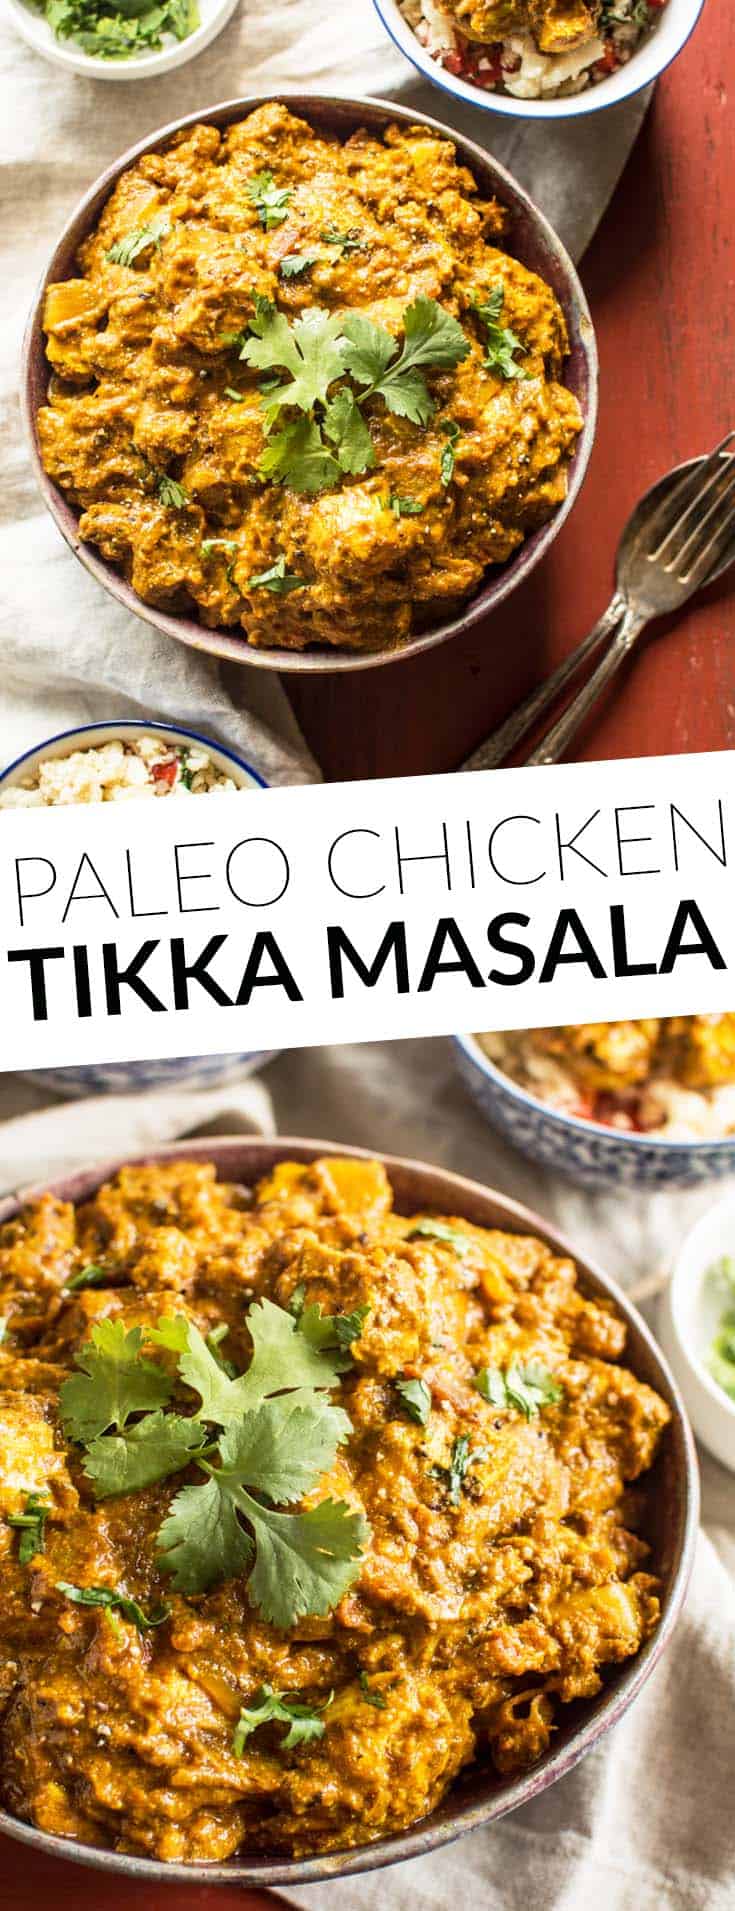 Paleo Chicken Tikka Masala - simple tikka masala dish that is Whole30 friendly! @healthynibs